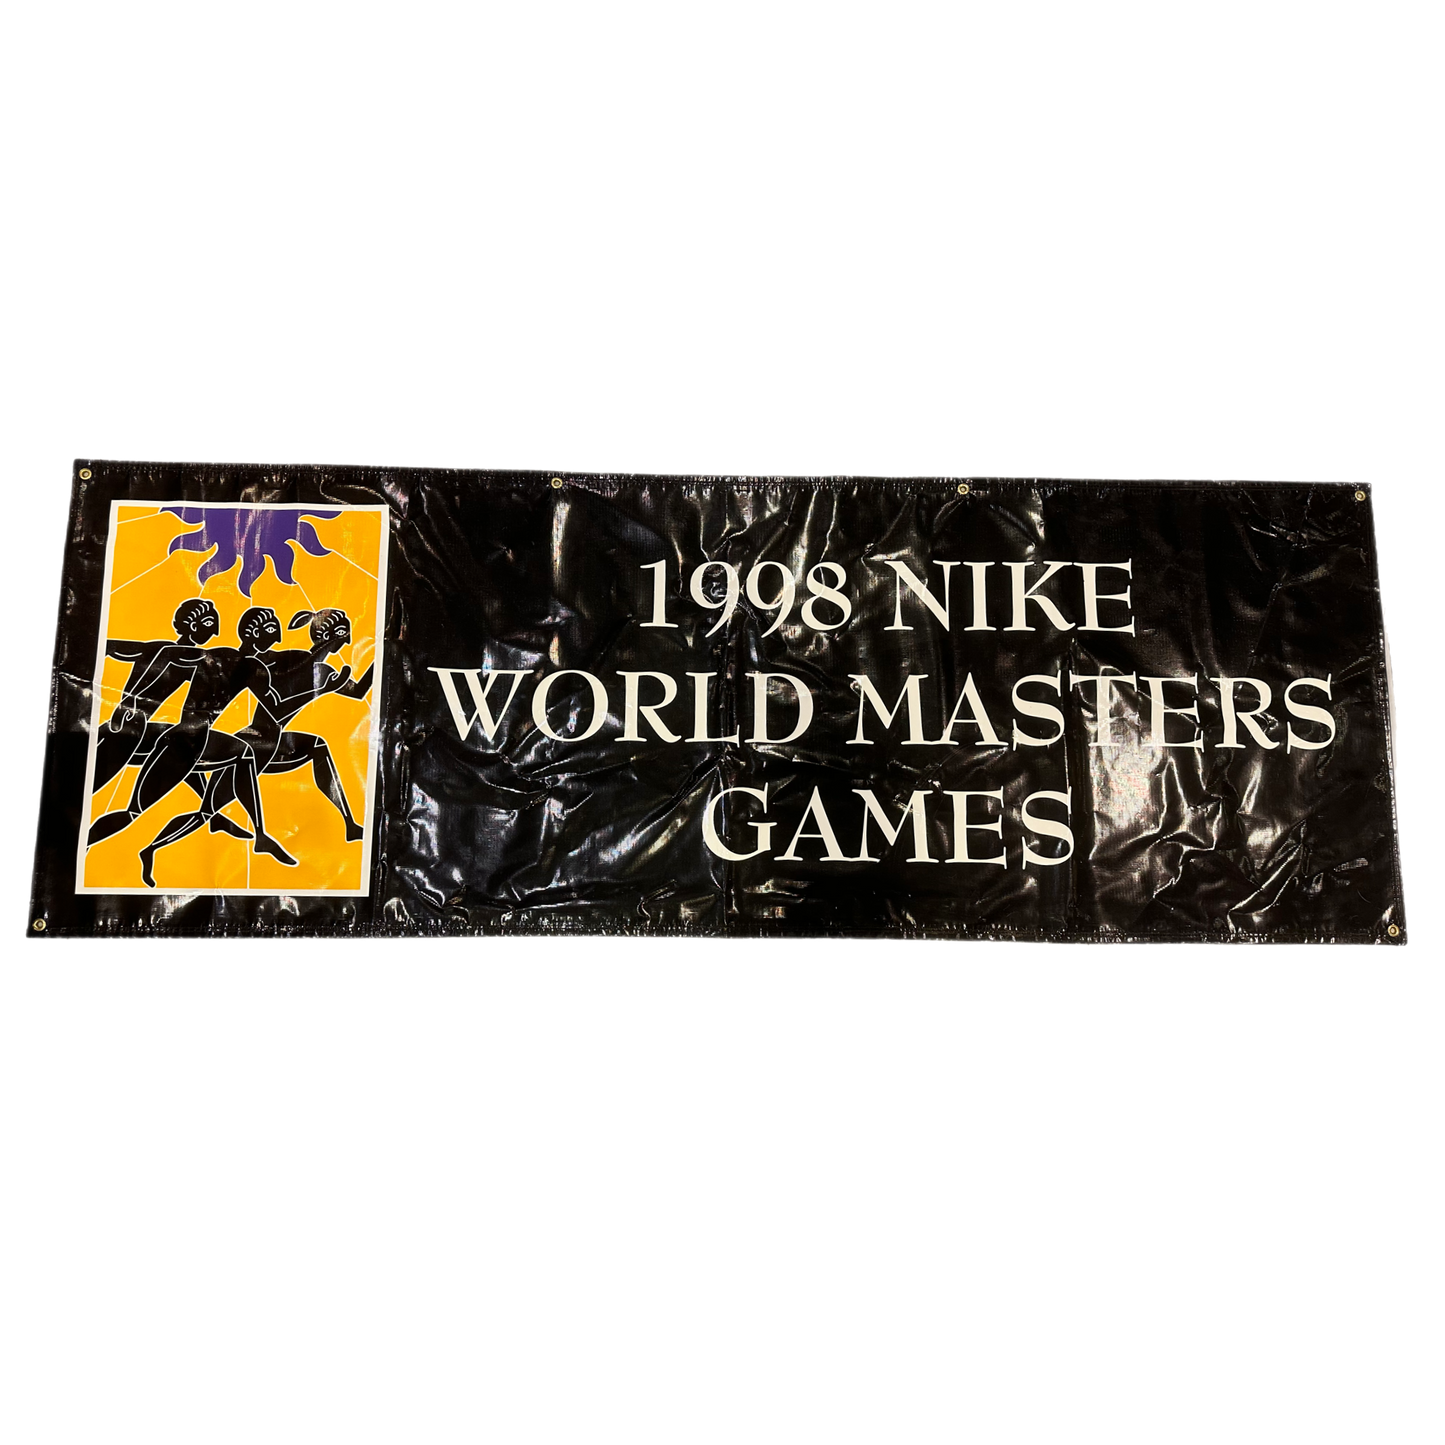 Nike - "1998 World Master Games Banner"